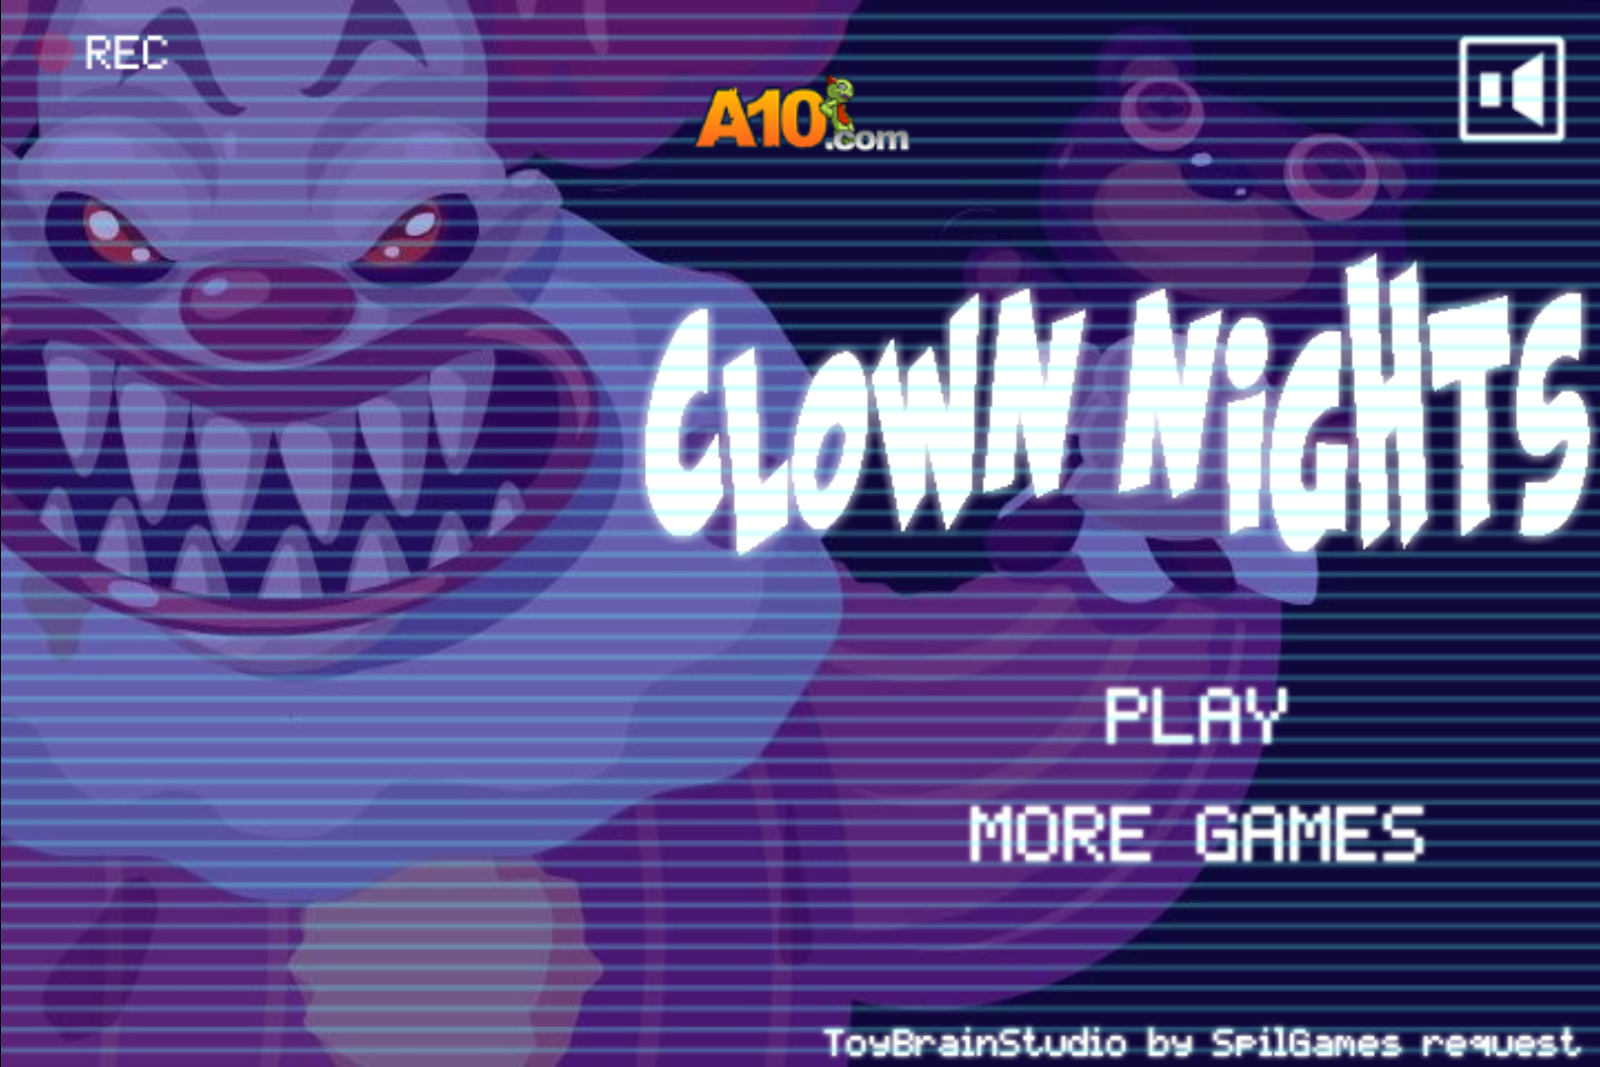 Clown Nights